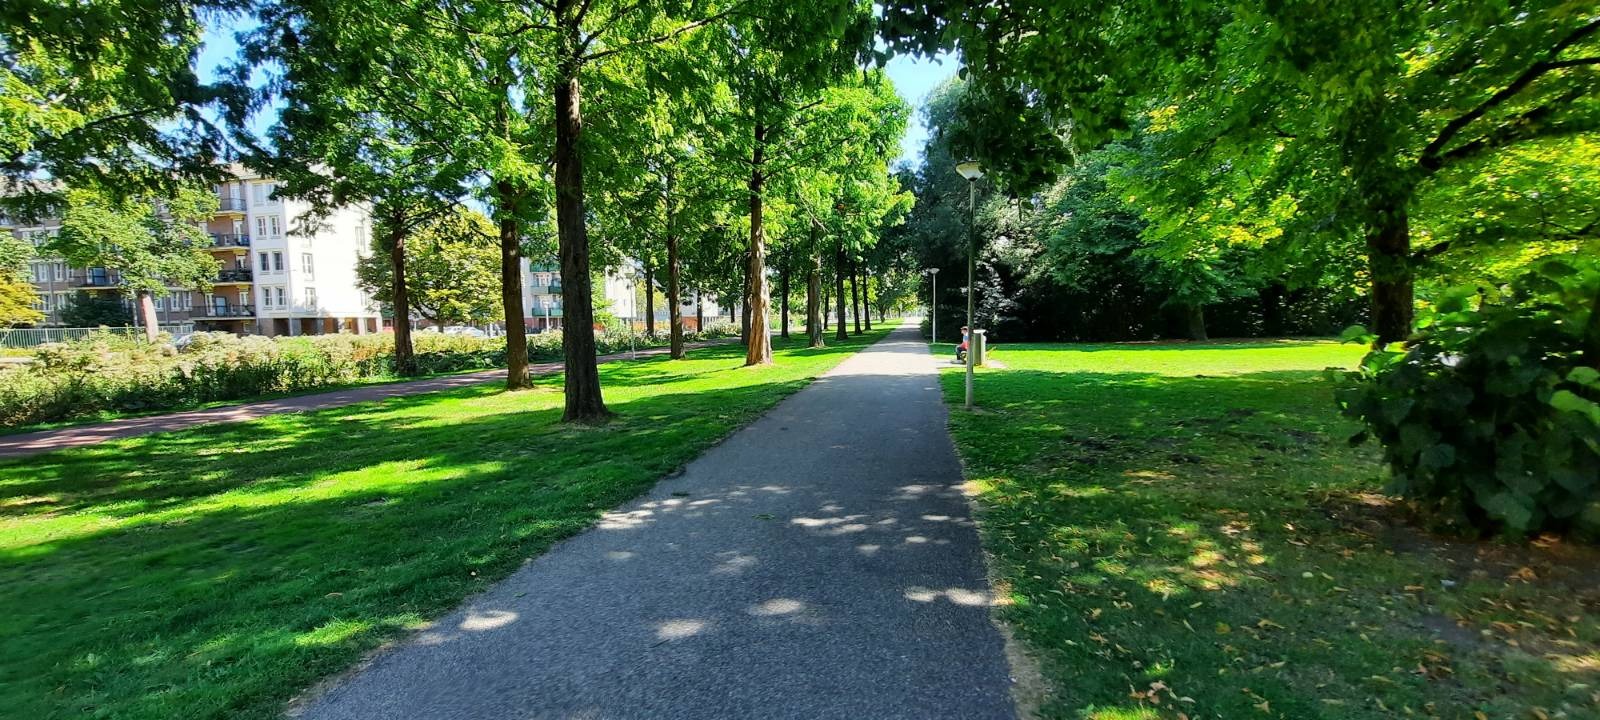 Amsterdam Rembrandpark